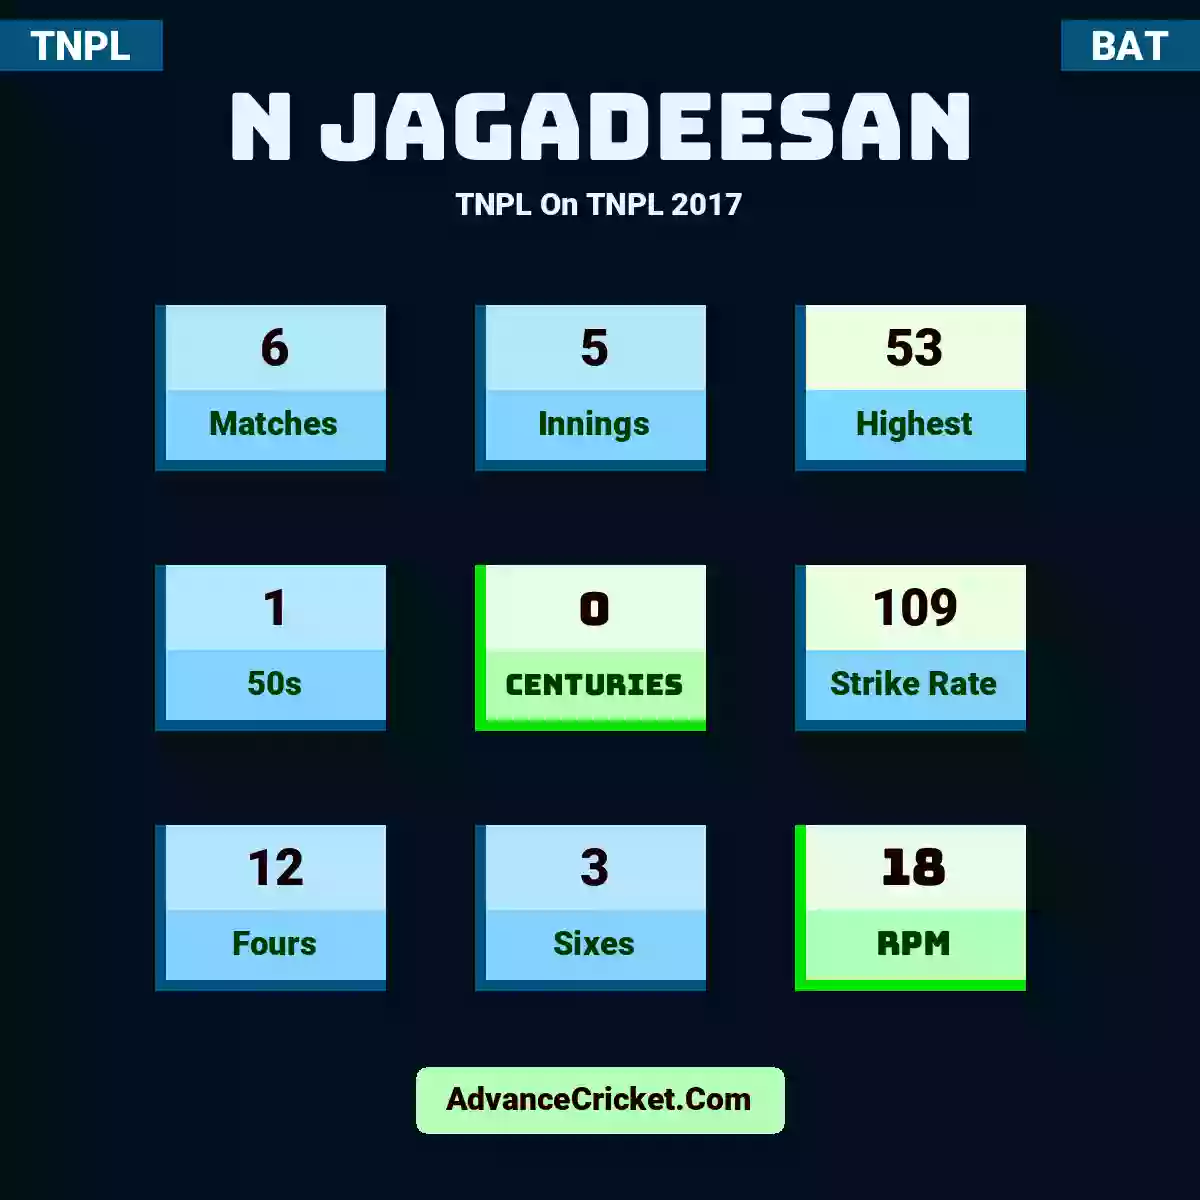 N Jagadeesan TNPL  On TNPL 2017, N Jagadeesan played 6 matches, scored 53 runs as highest, 1 half-centuries, and 0 centuries, with a strike rate of 109. N.Jagadeesan hit 12 fours and 3 sixes, with an RPM of 18.